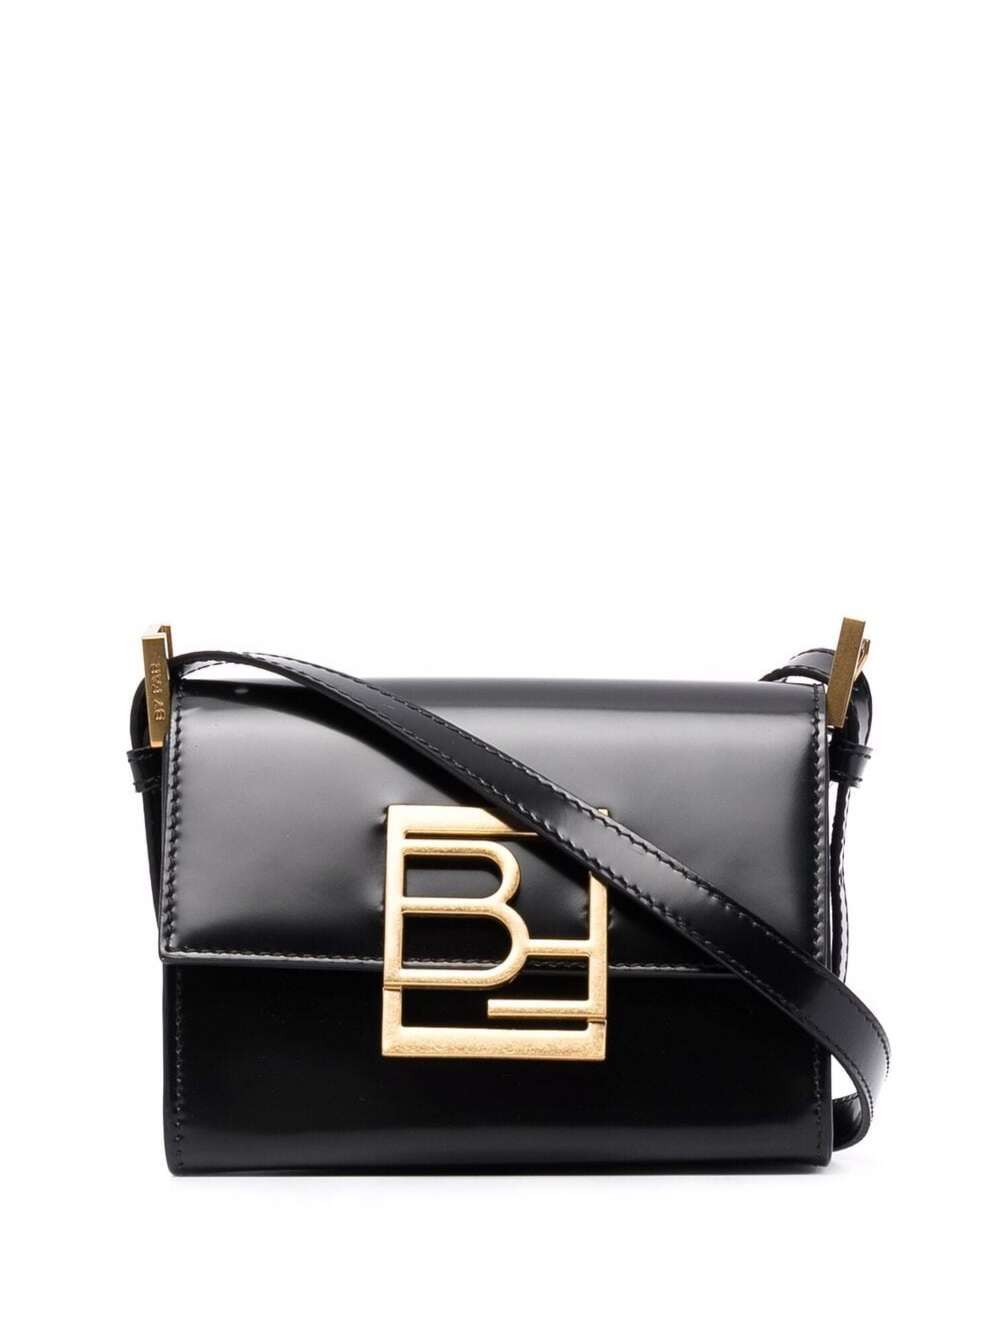 Fran Glossy Black Patent Leather Crossbody Bag By Far Woman